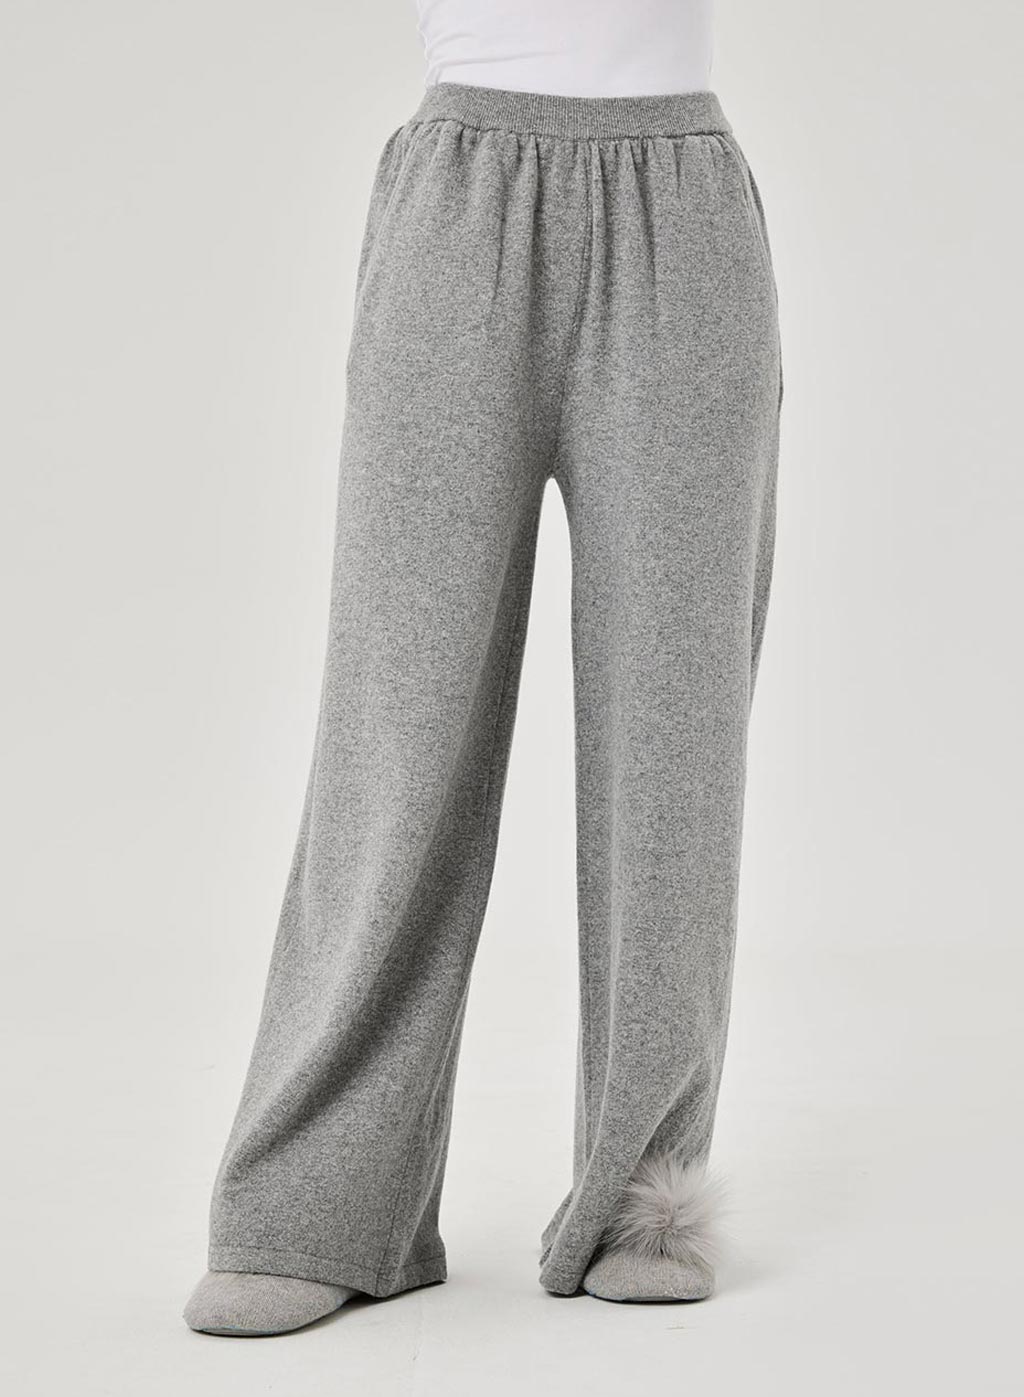 https://naploungewear.com/wp-content/uploads/2021/11/Flared-Full-Length-Pants-morning-fog-6.jpeg